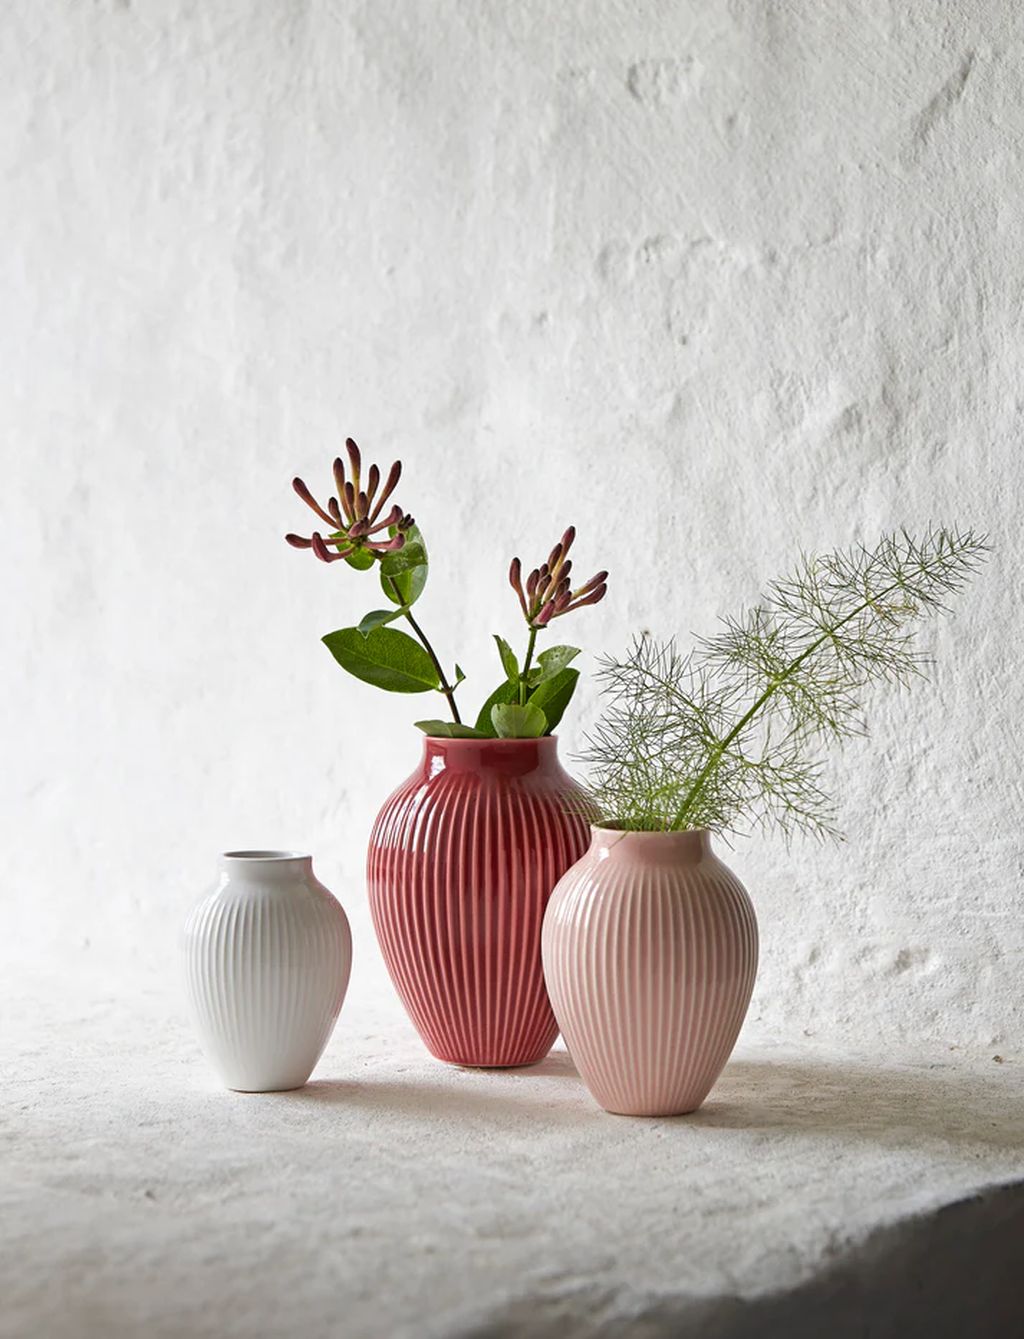 Knabstrup Keramik Vase With Grooves H 27 Cm, Bordeaux